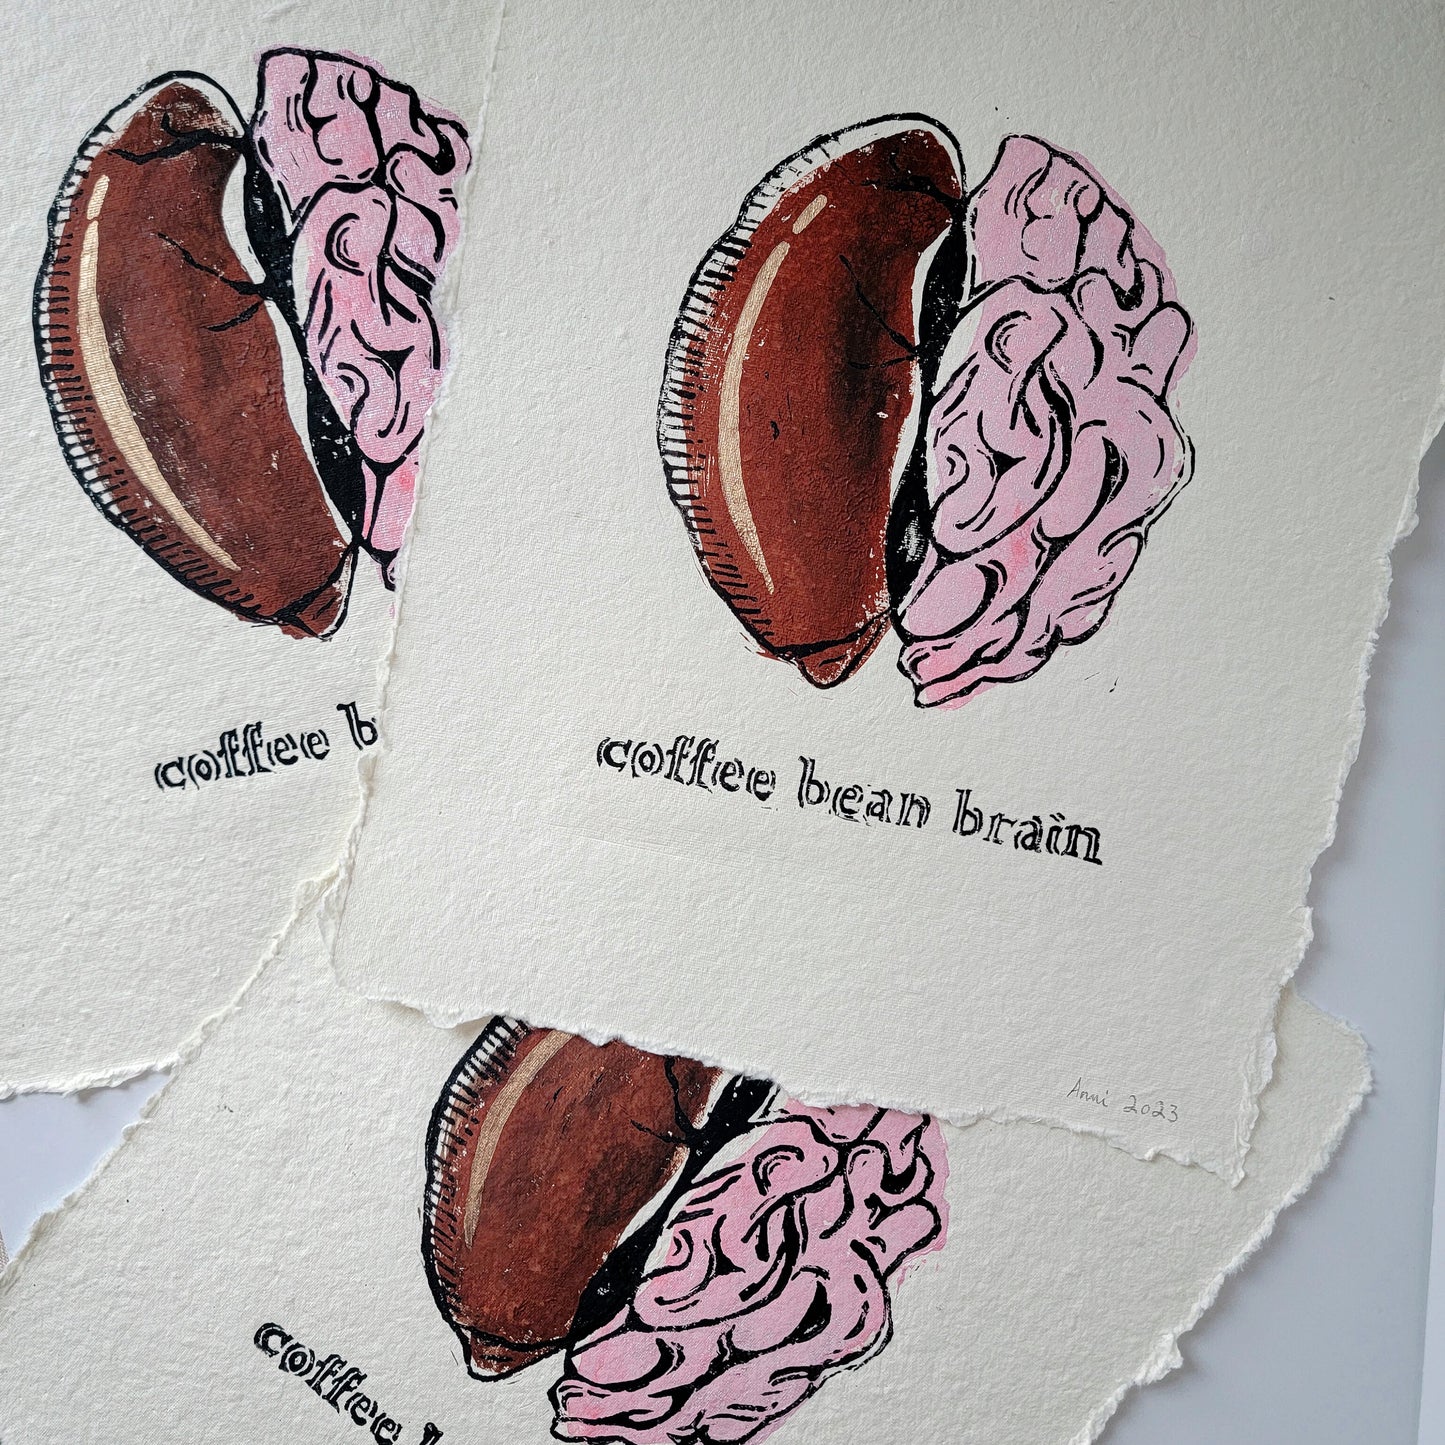 "Coffee Bean Brain" - signed linocut art print